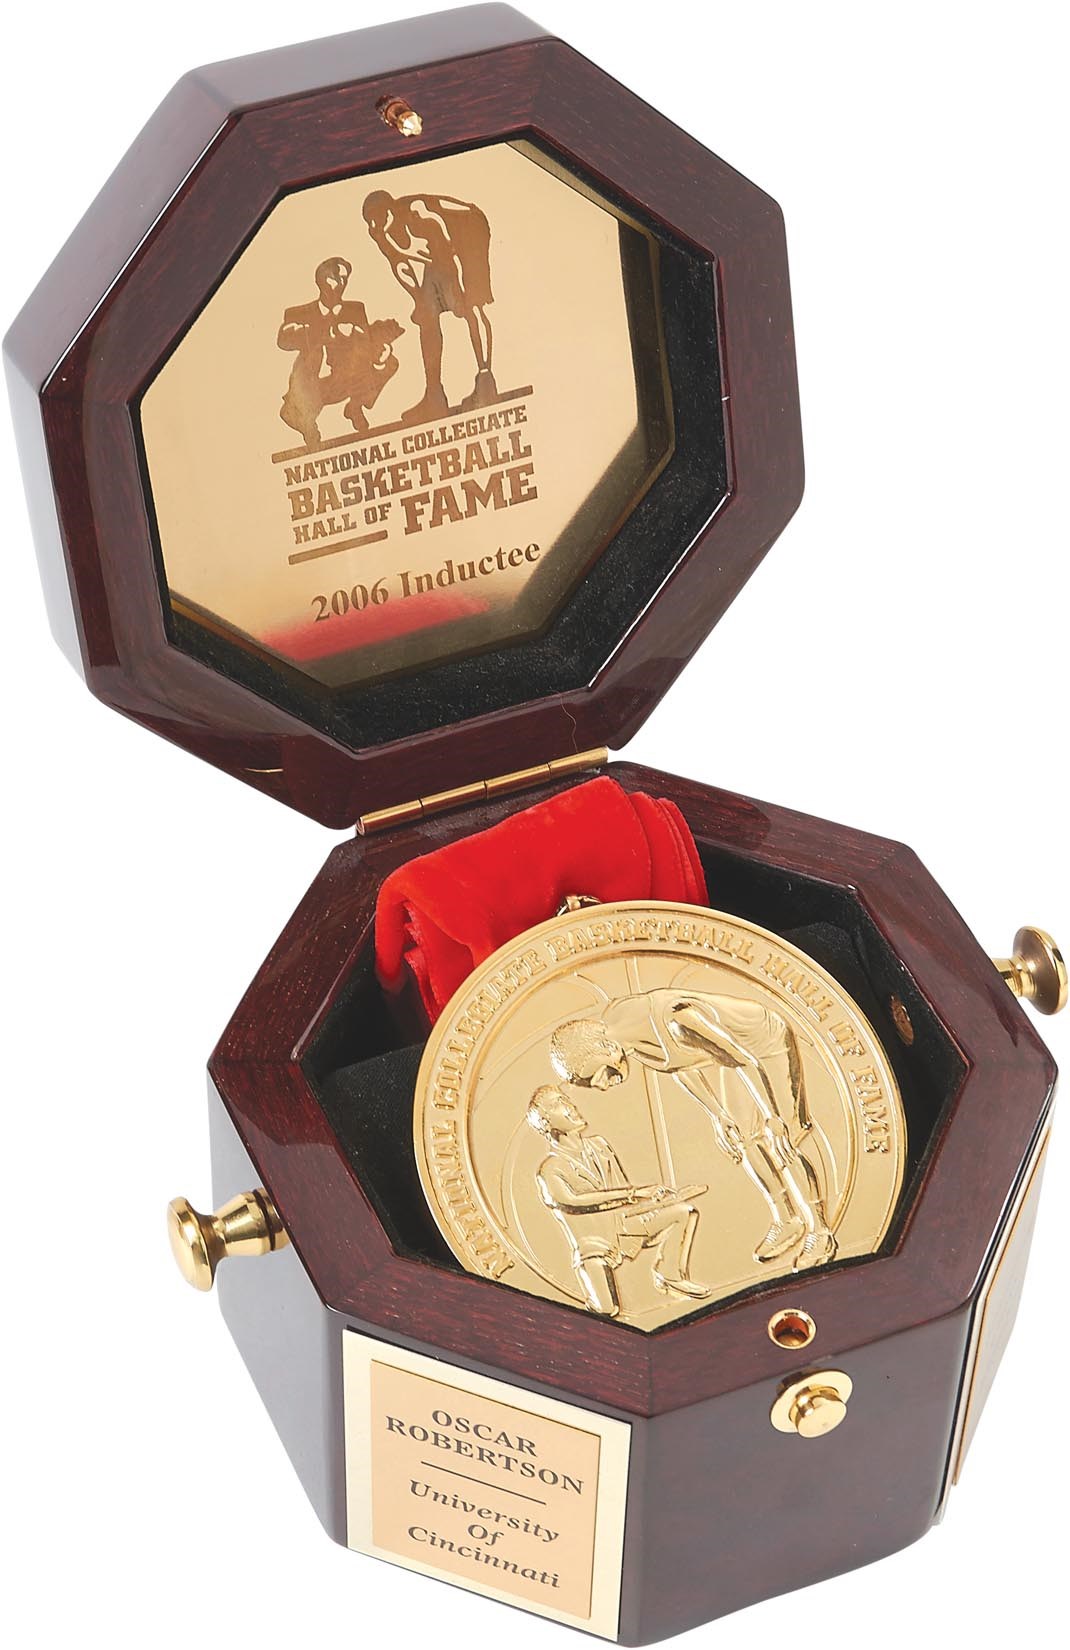 The Oscar Robertson Collection - Oscar Robertson College Basketball Hall of Fame Medal In Presentational Case